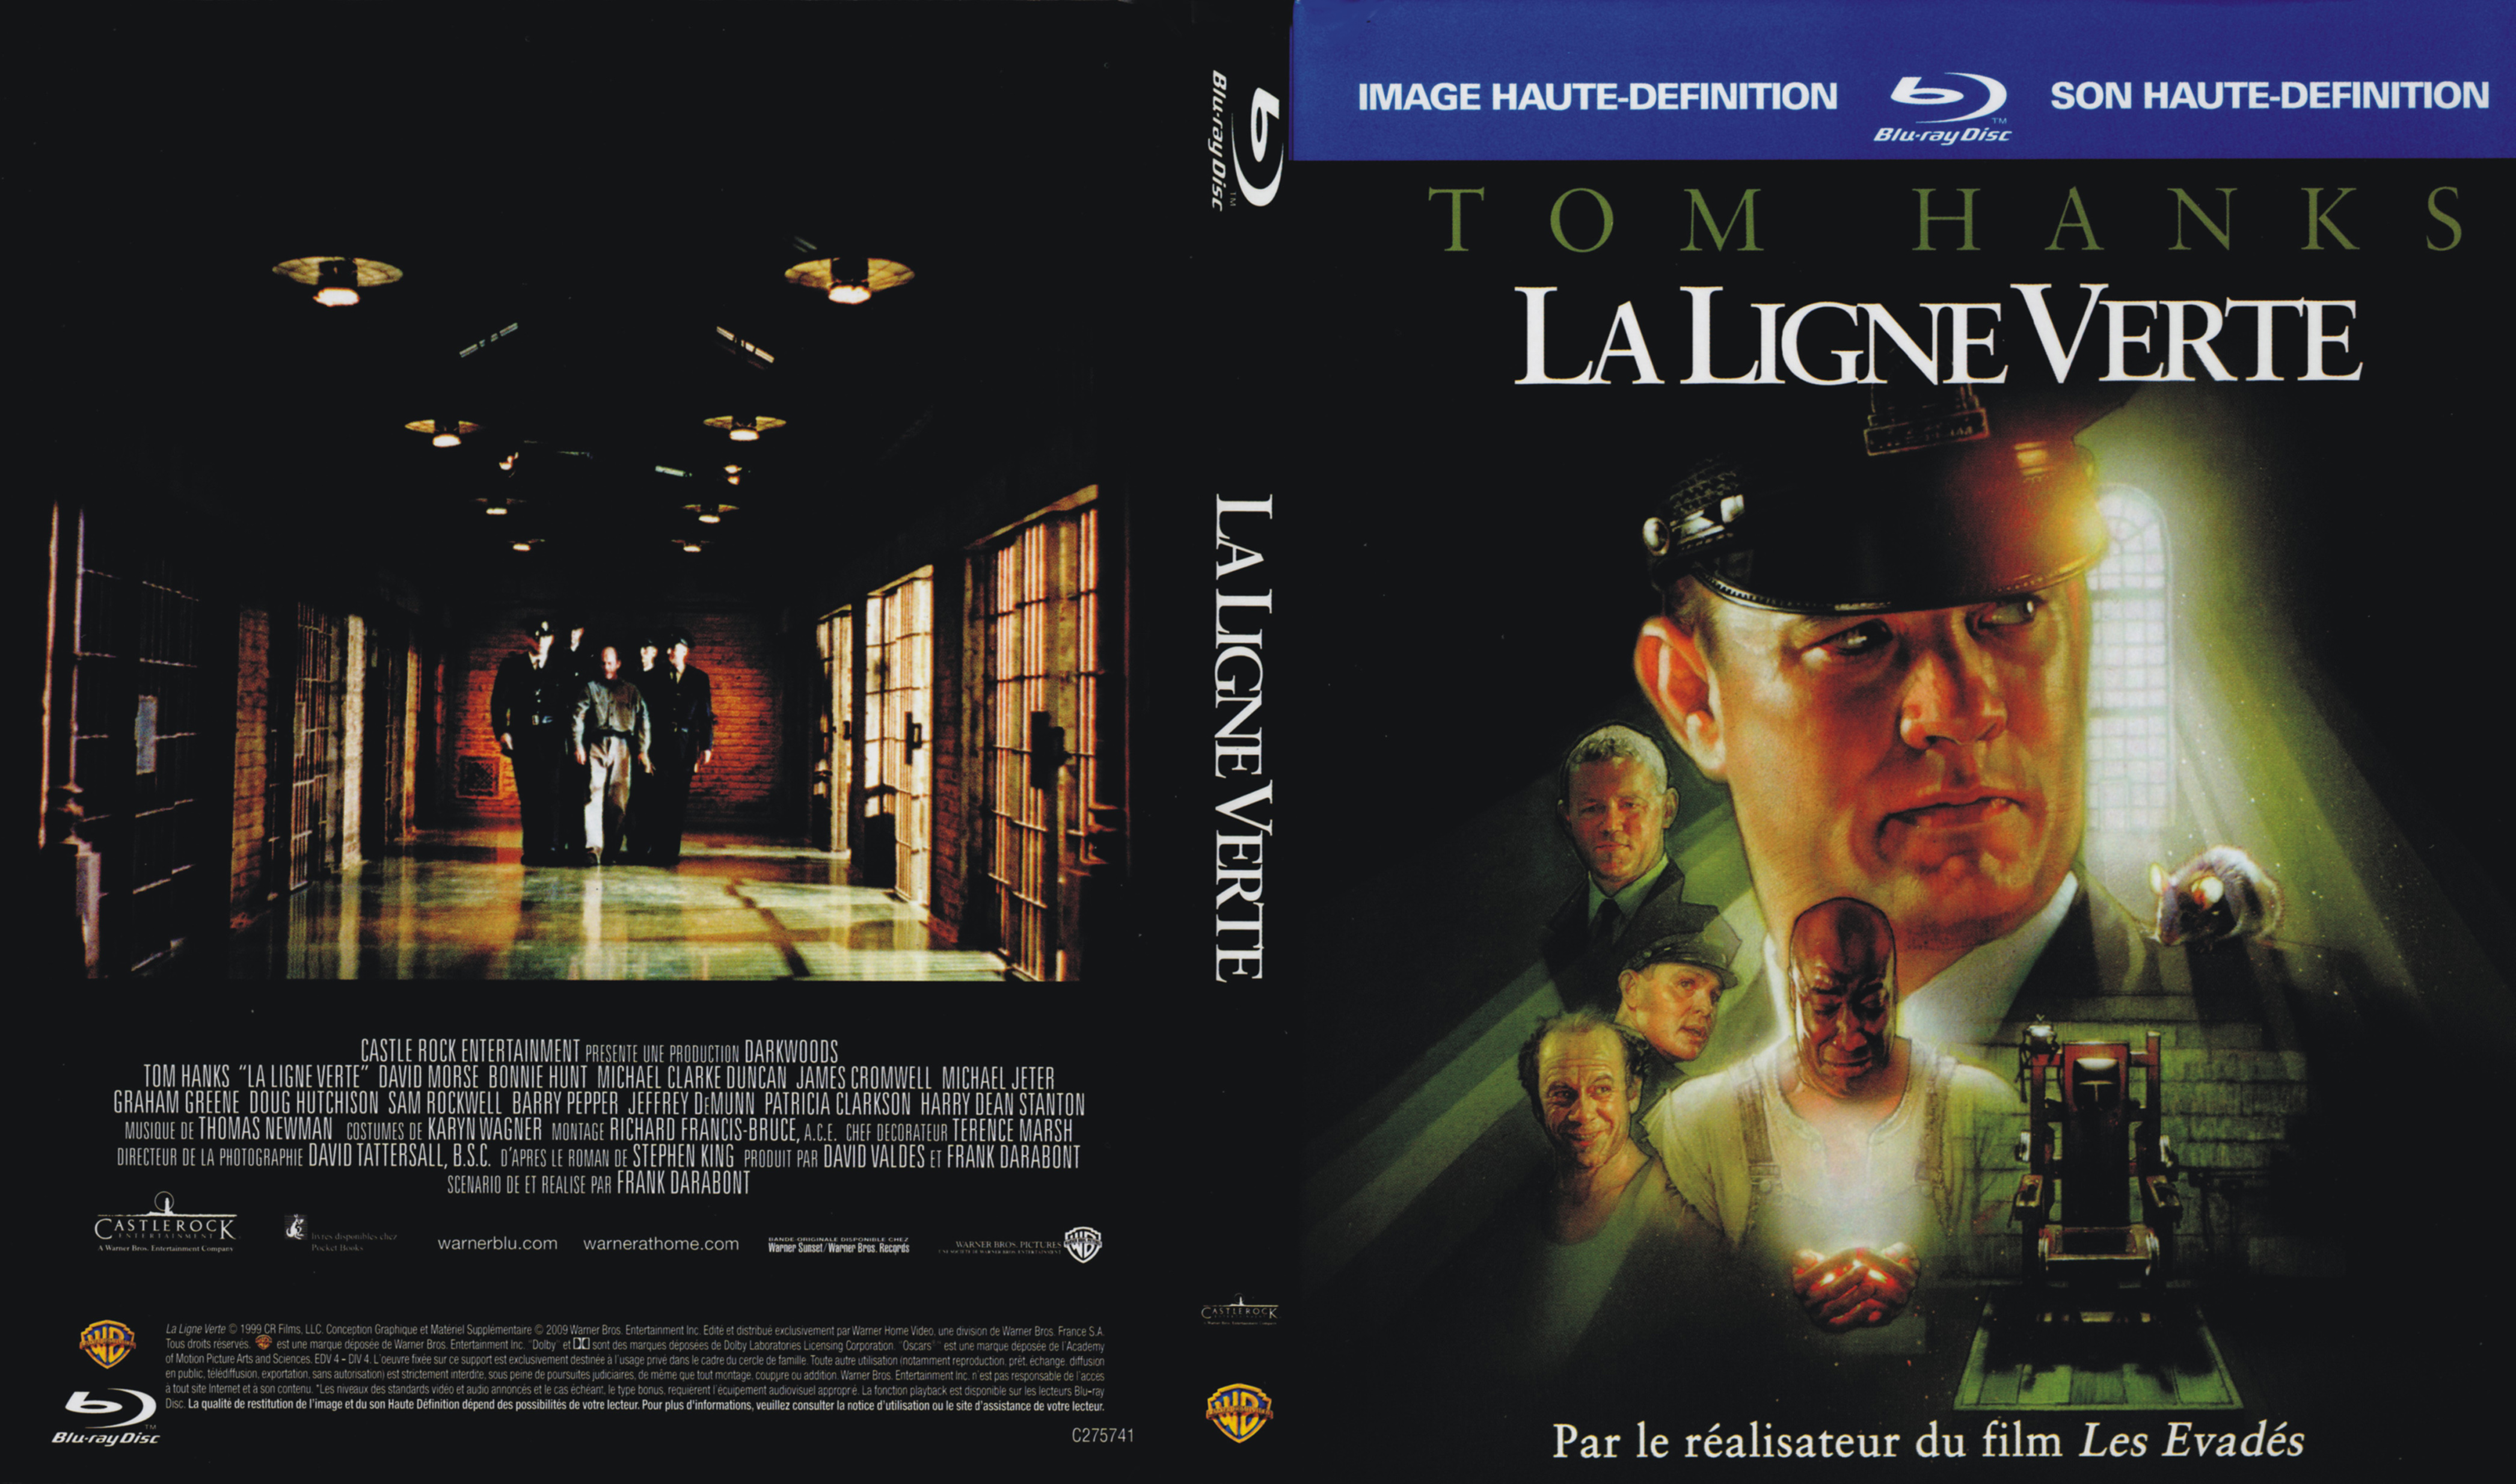 Jaquette DVD La ligne verte (BLU-RAY) v4